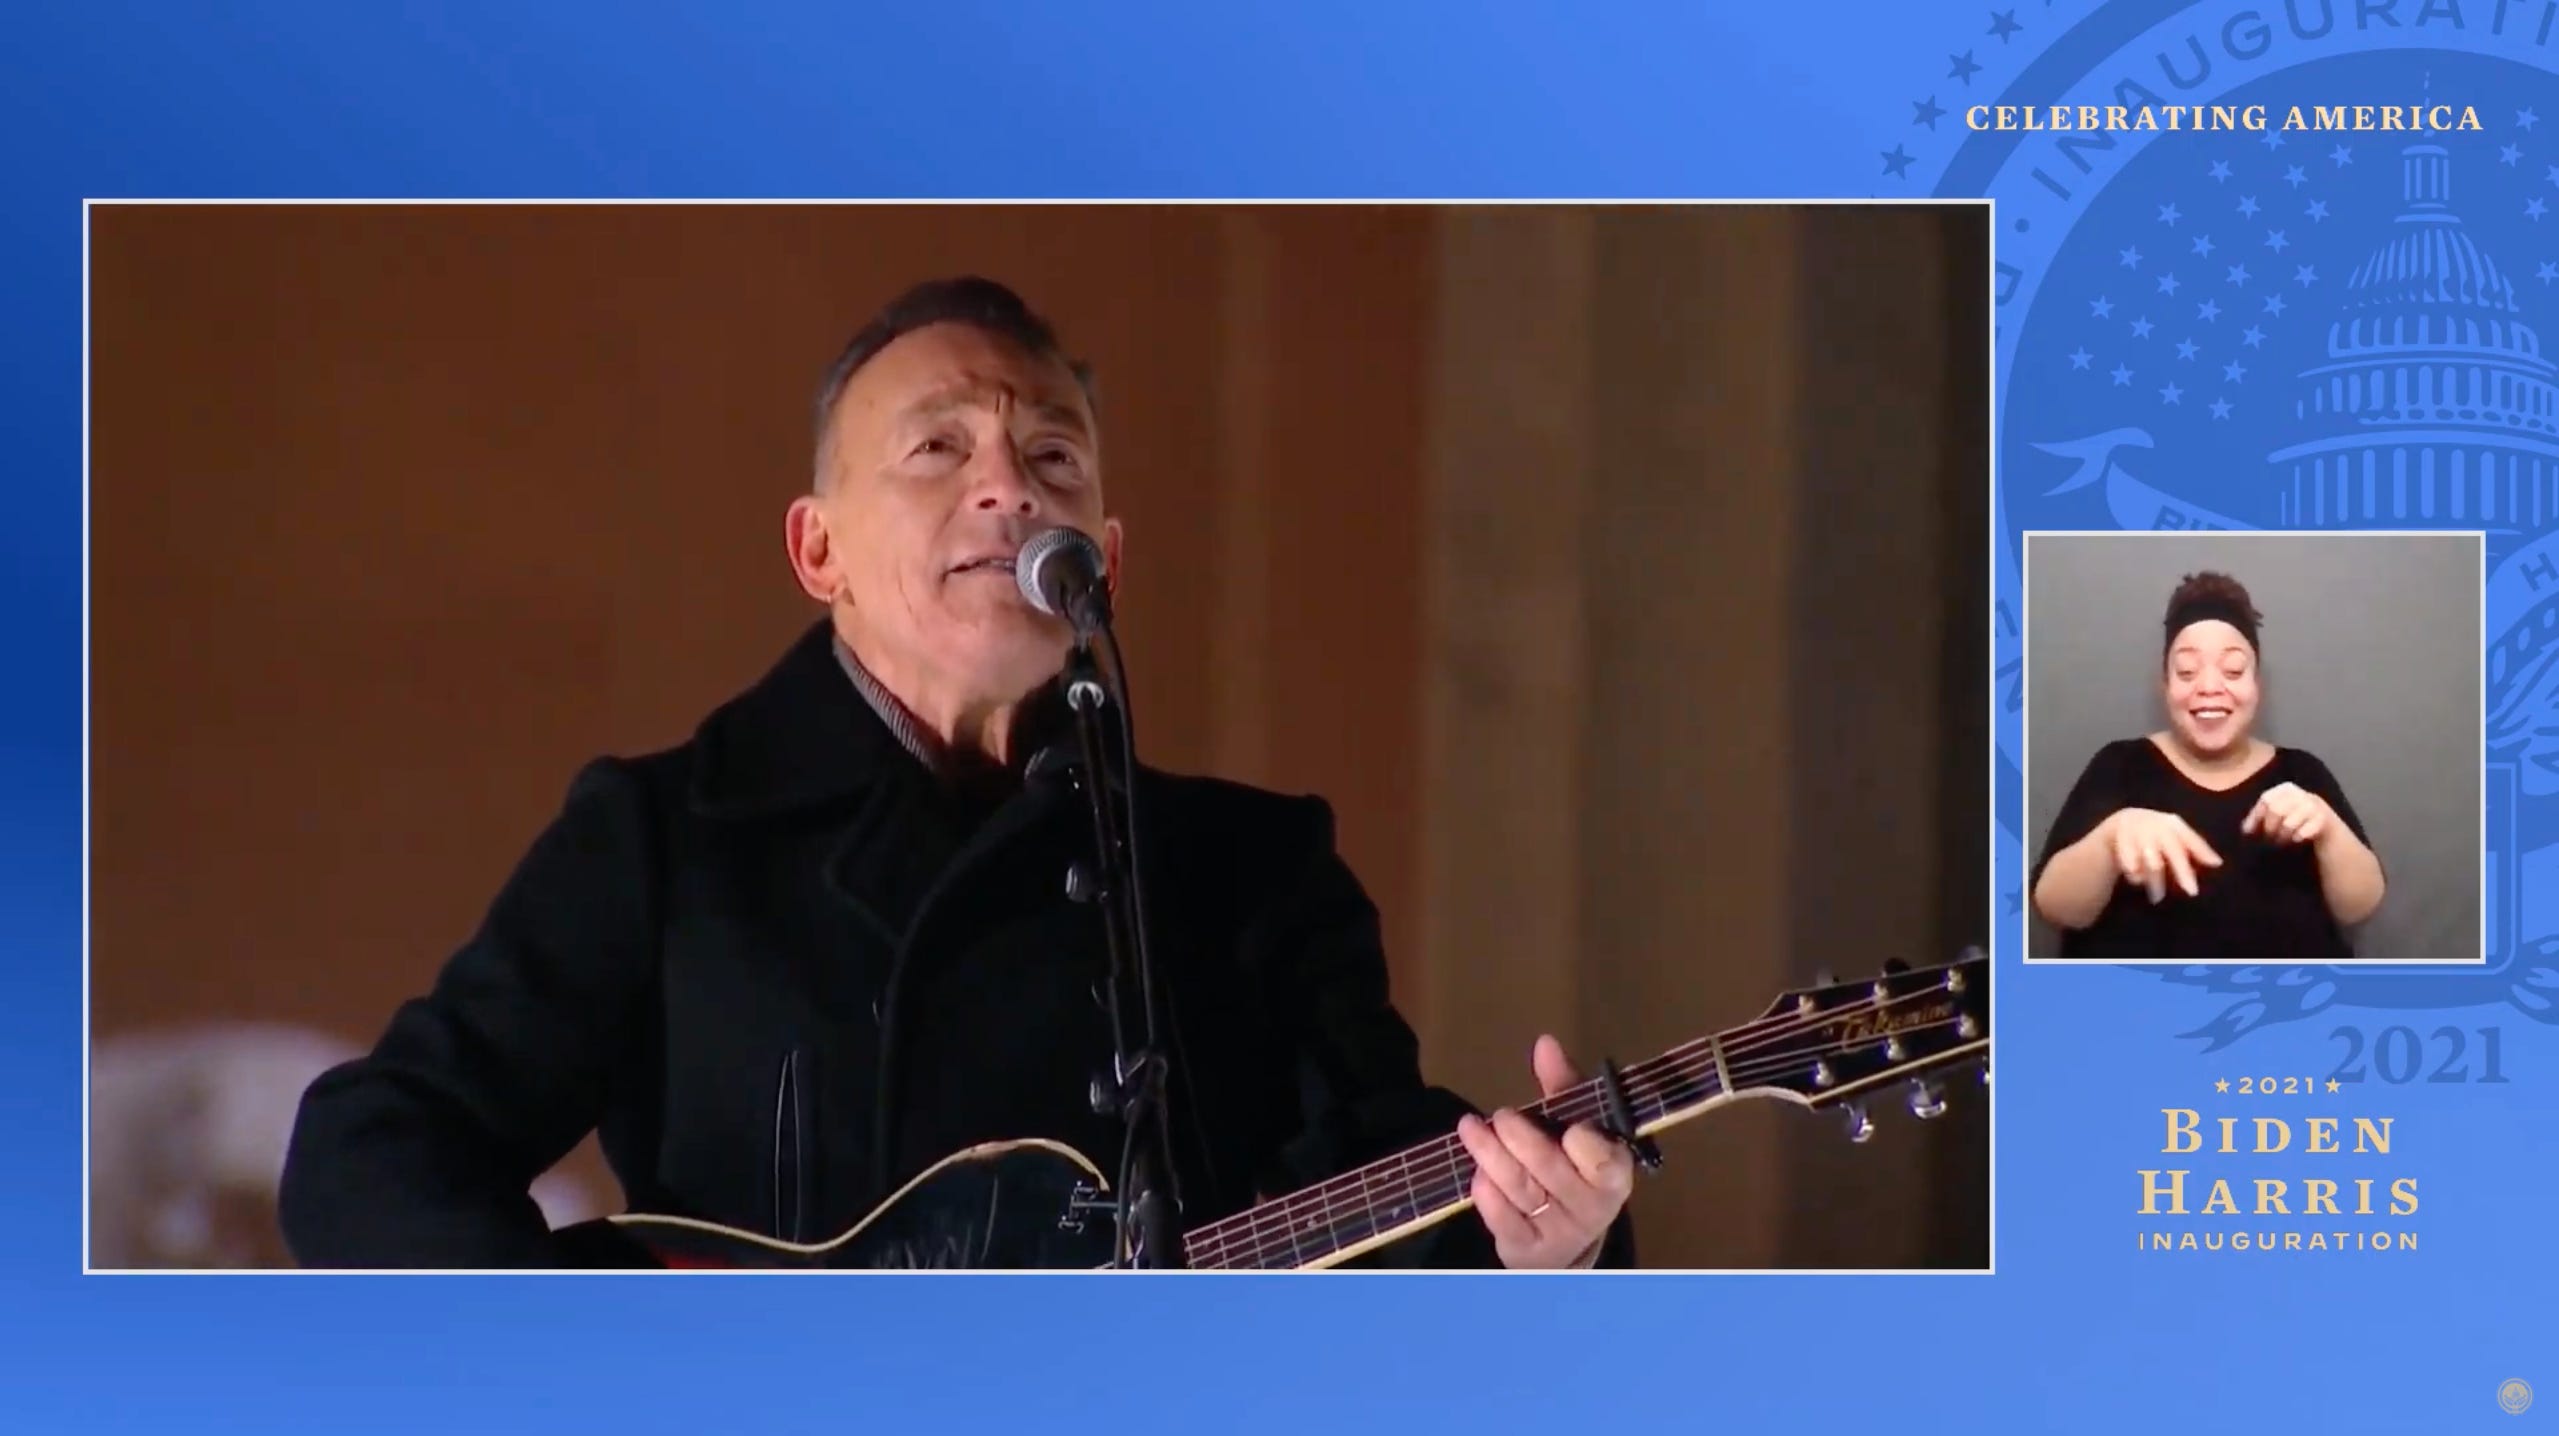 Bruce Springsteen performs as part of Joe Biden's "Celebrating America" inauguration celebration on Jan. 21, 2021.